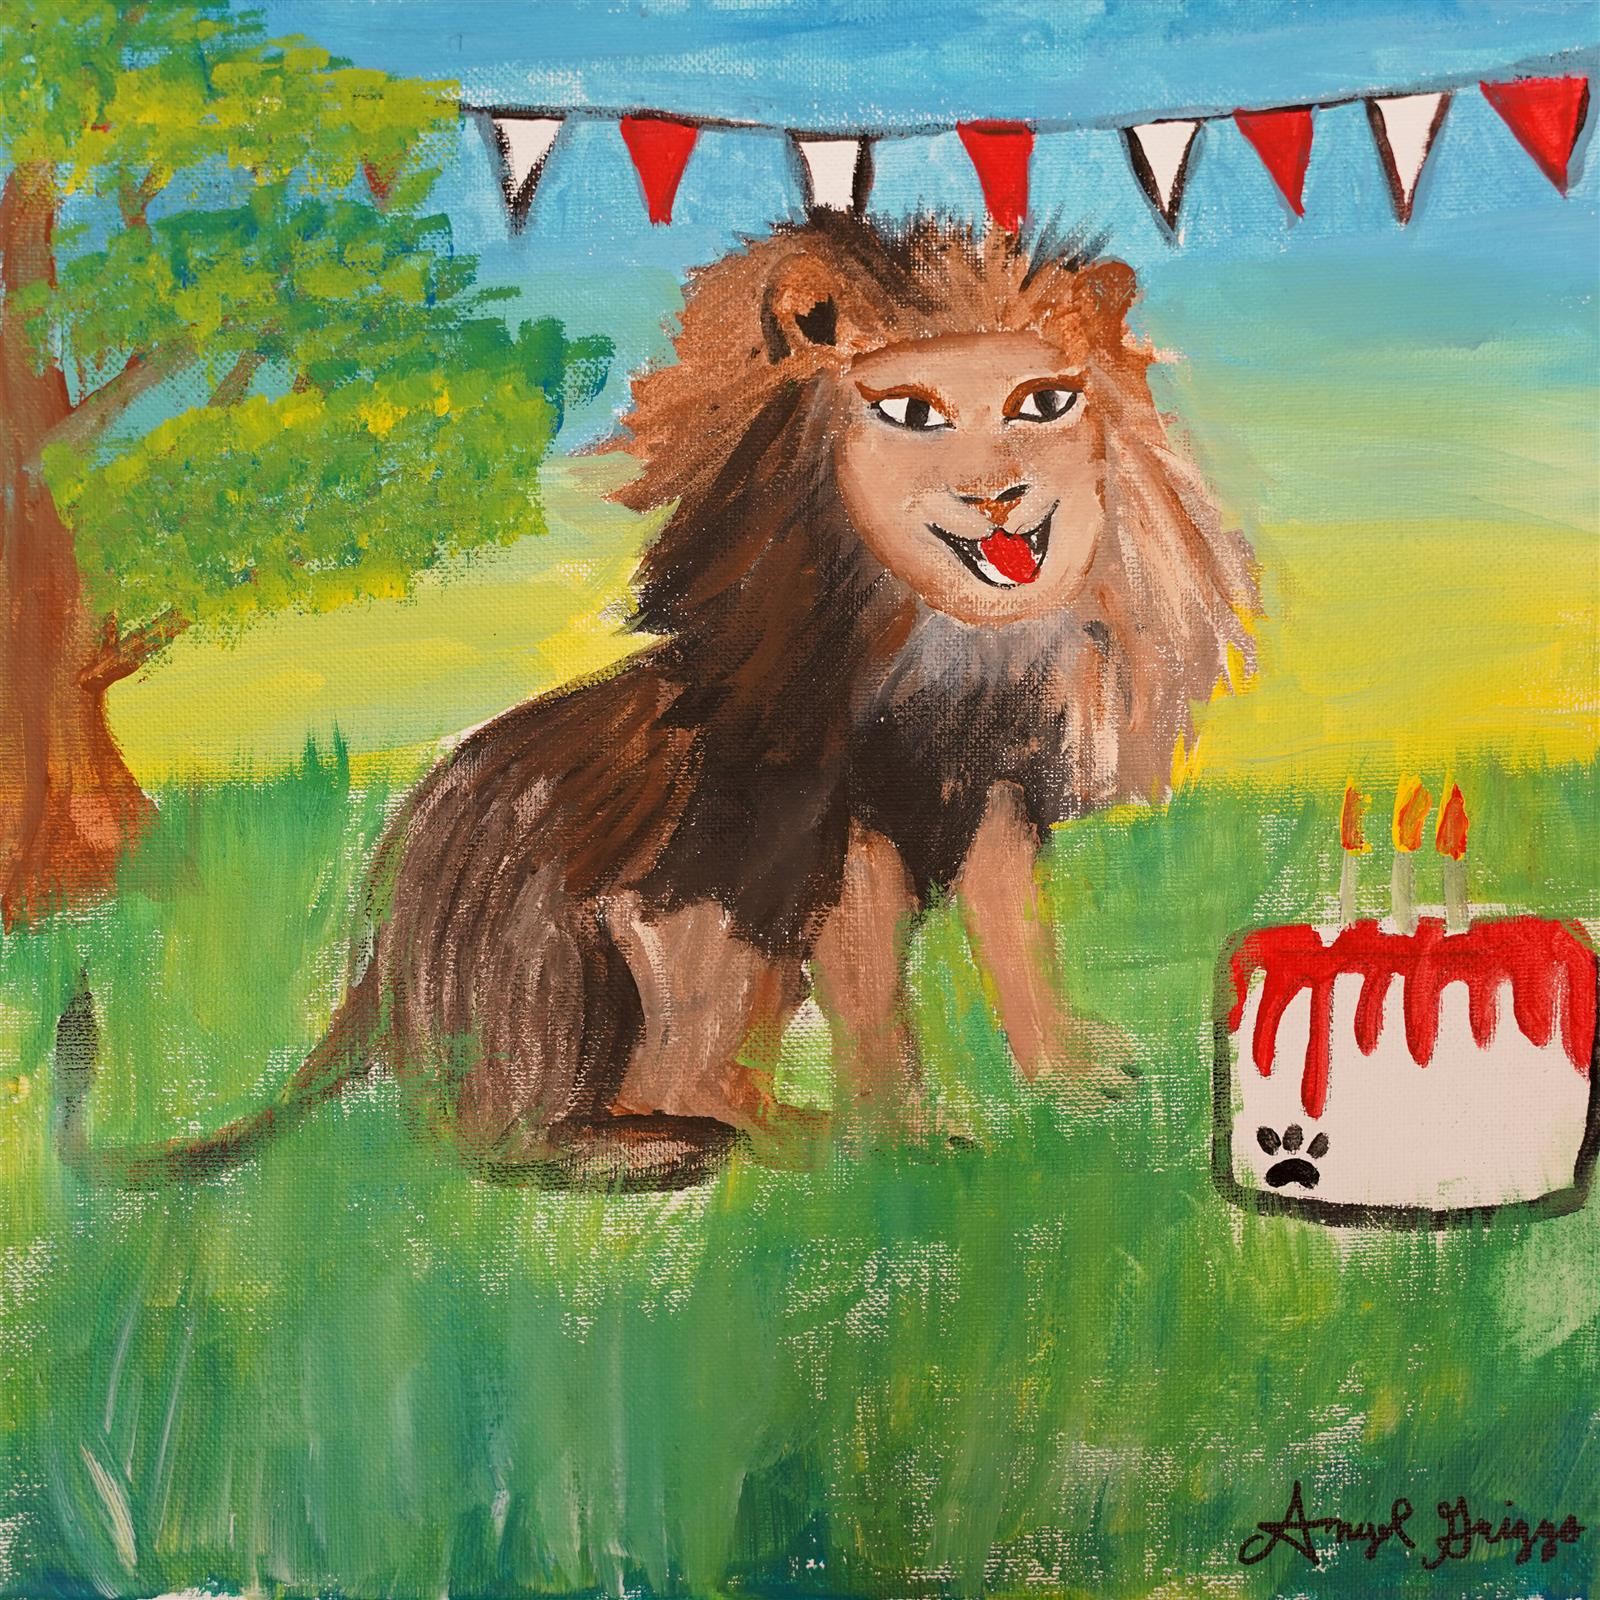  Birthday card winner features ROARING good artwork!